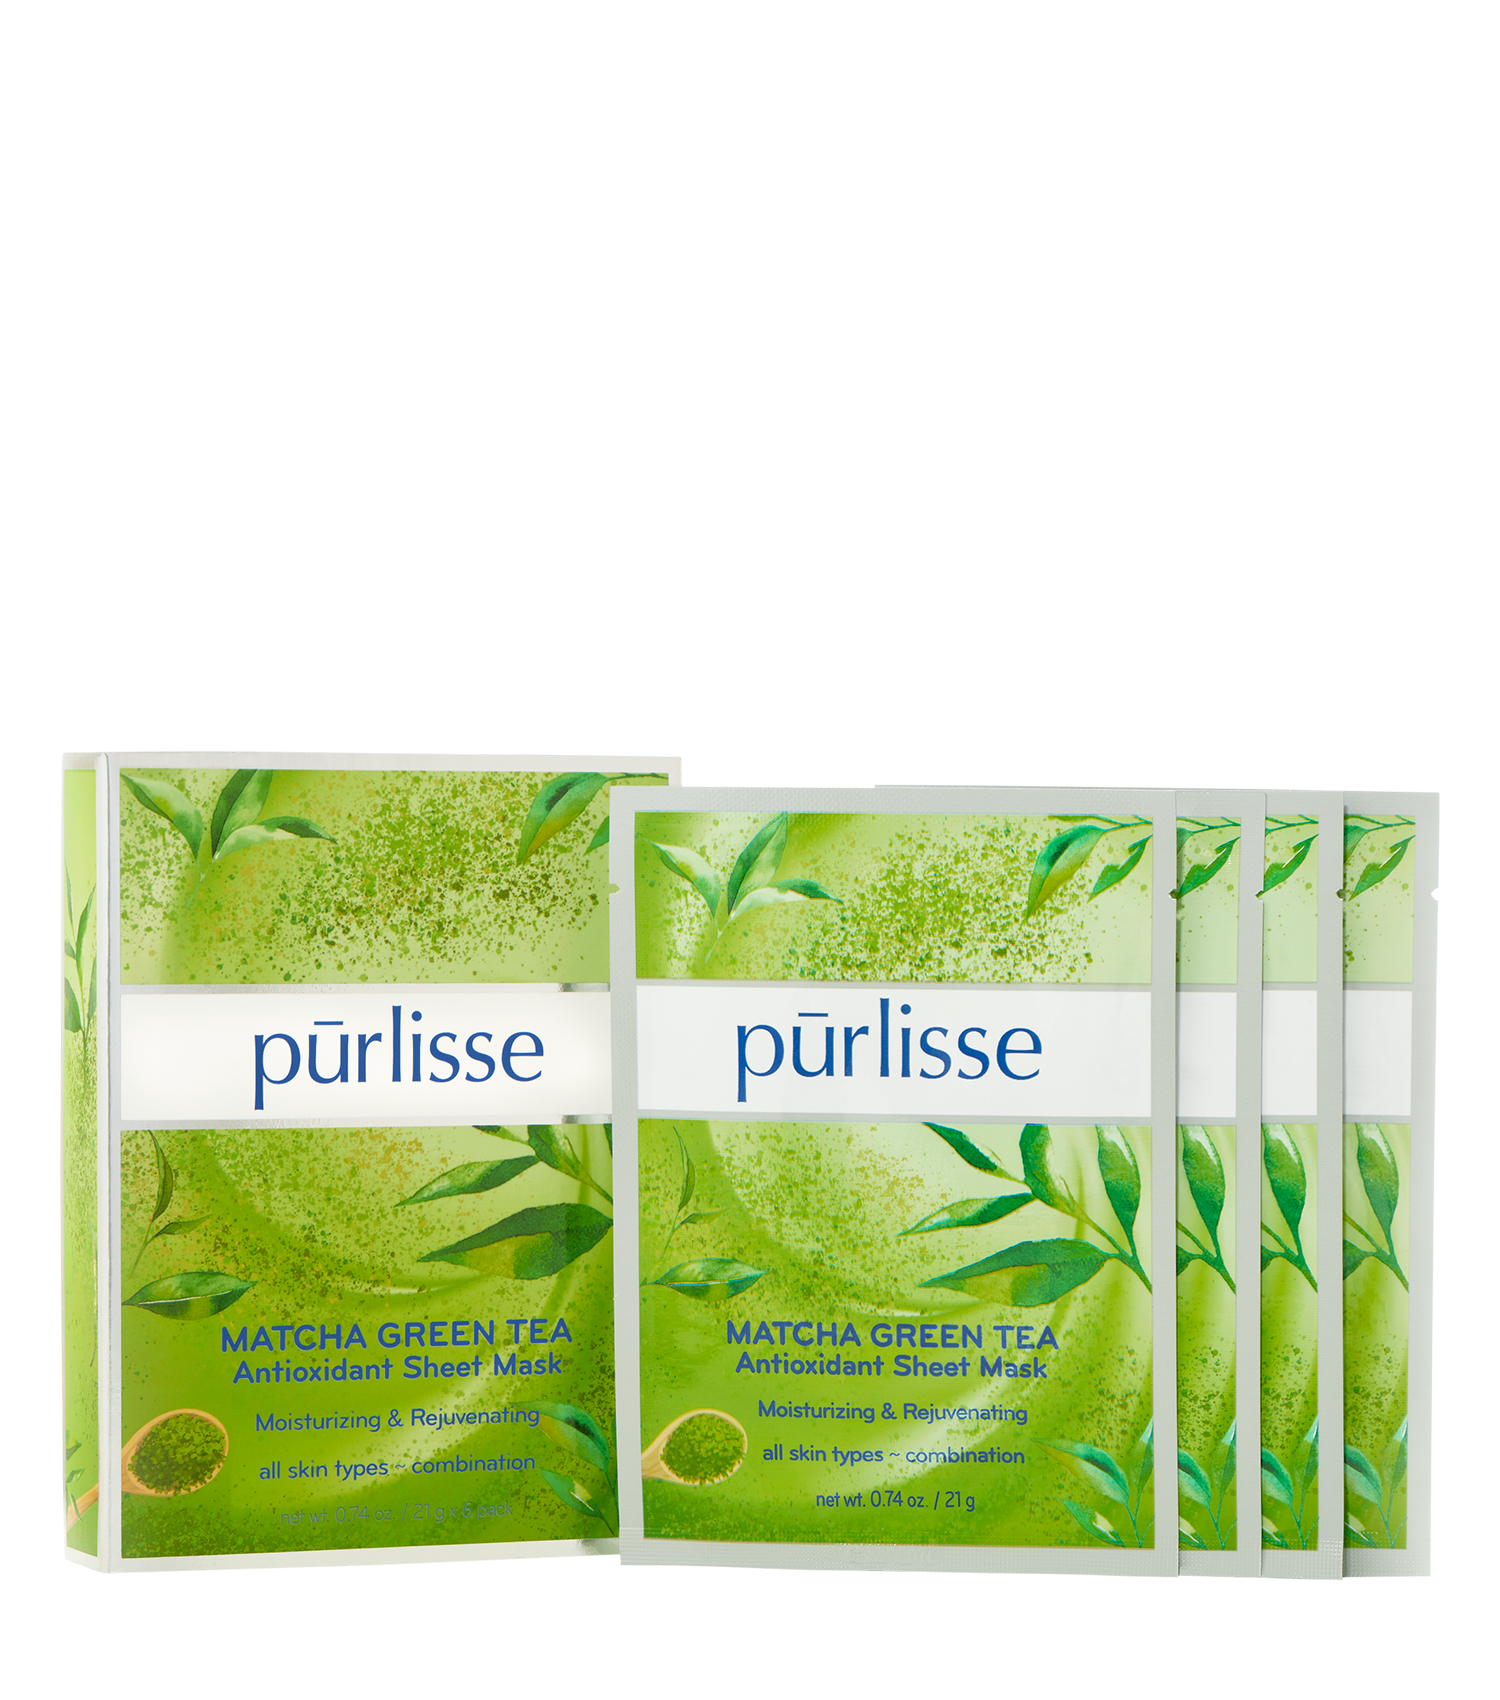 Pur-lisse MATCHA GREEN TEA Antioxidant Sheet Mask  1